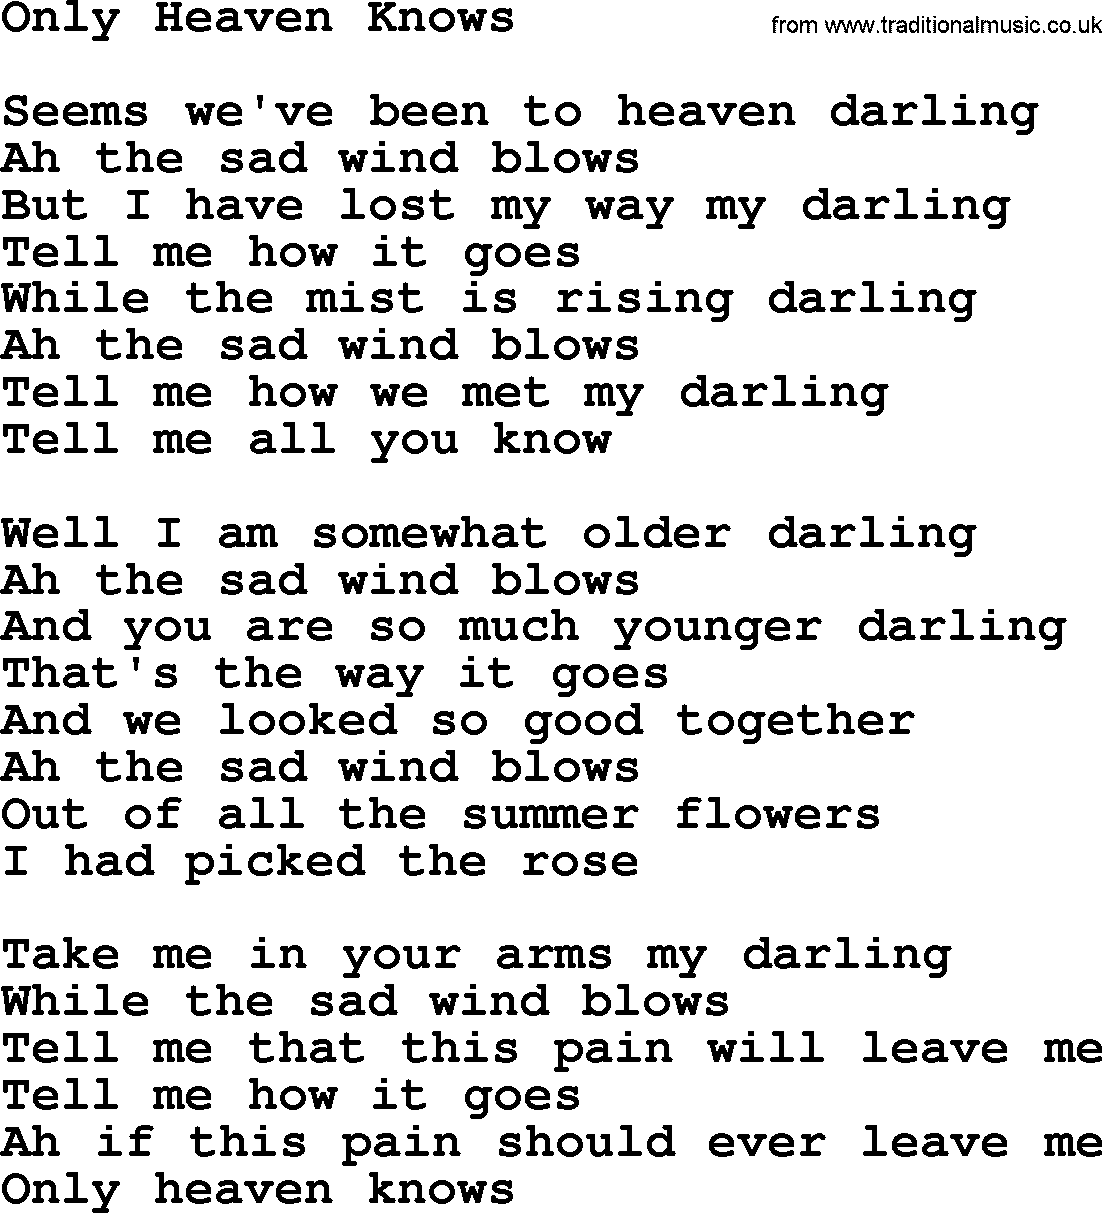 Joan Baez song Only Heaven Knows, lyrics